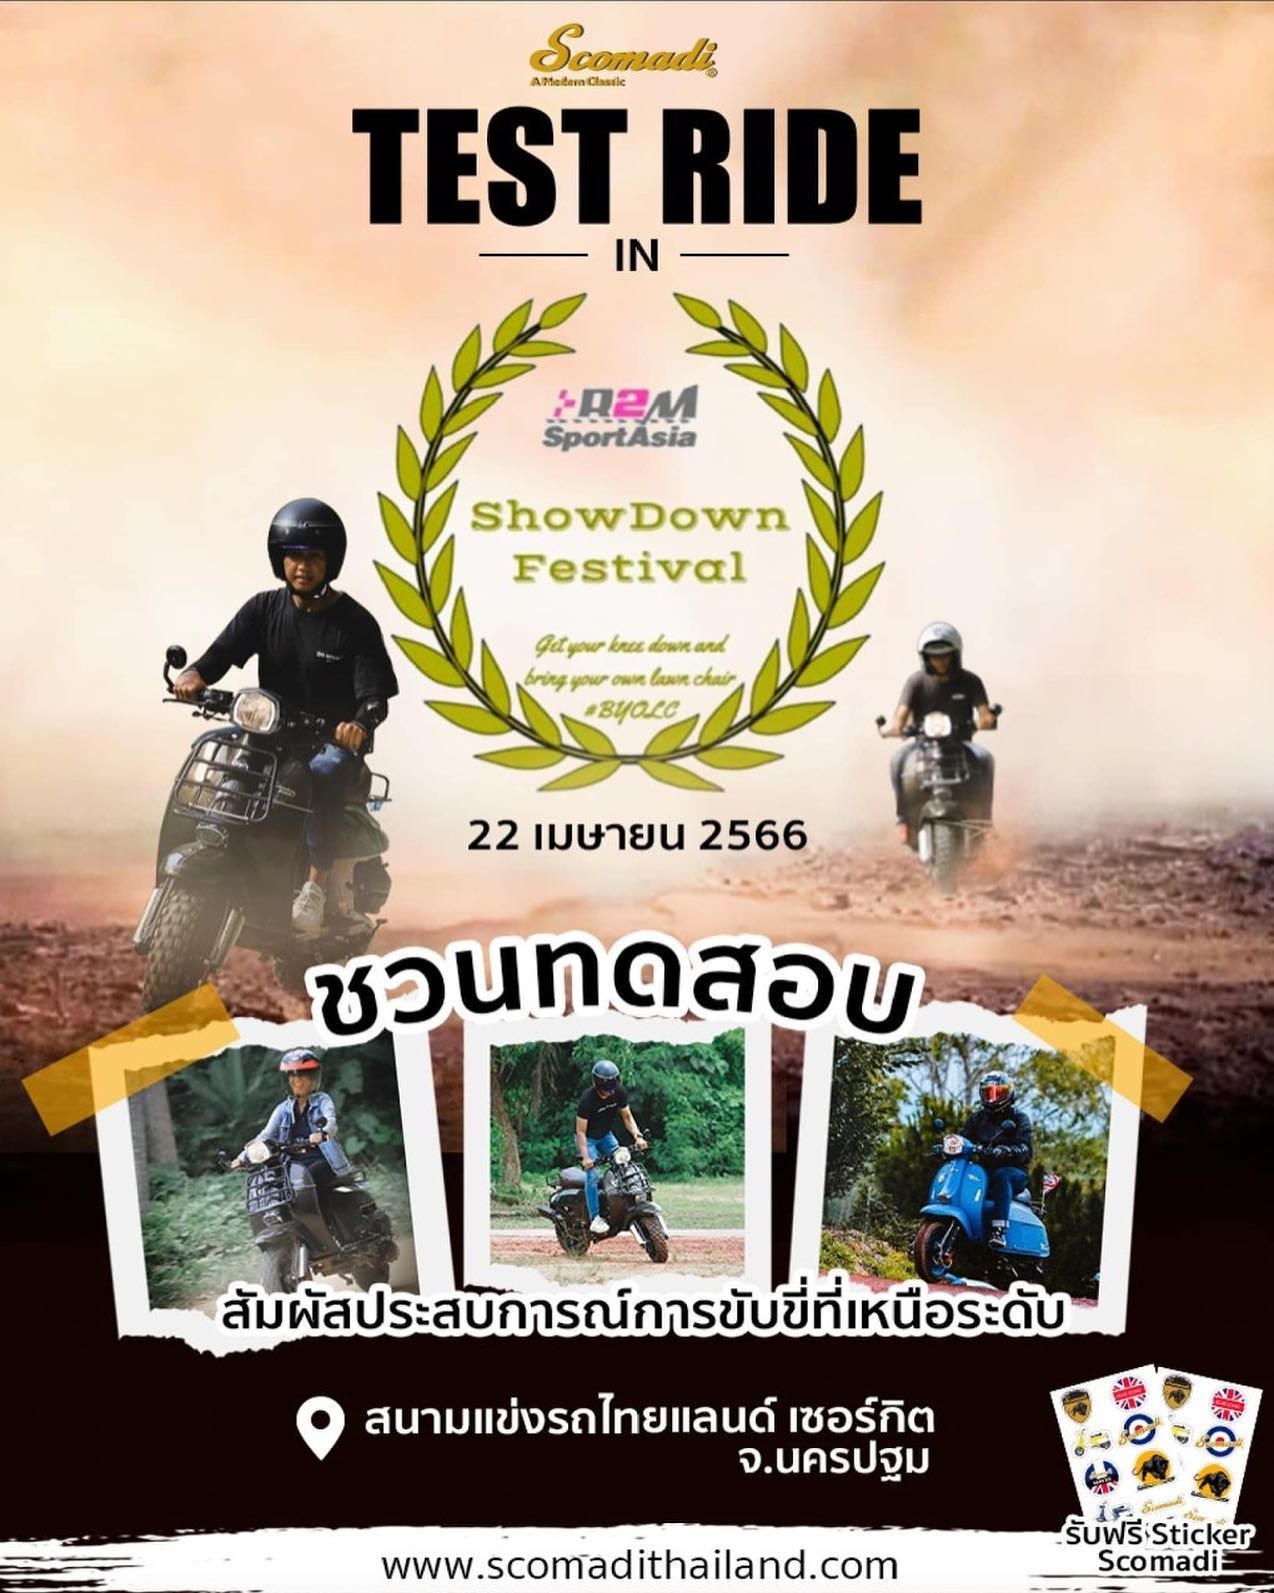 Scomadi Thailand Test Ride